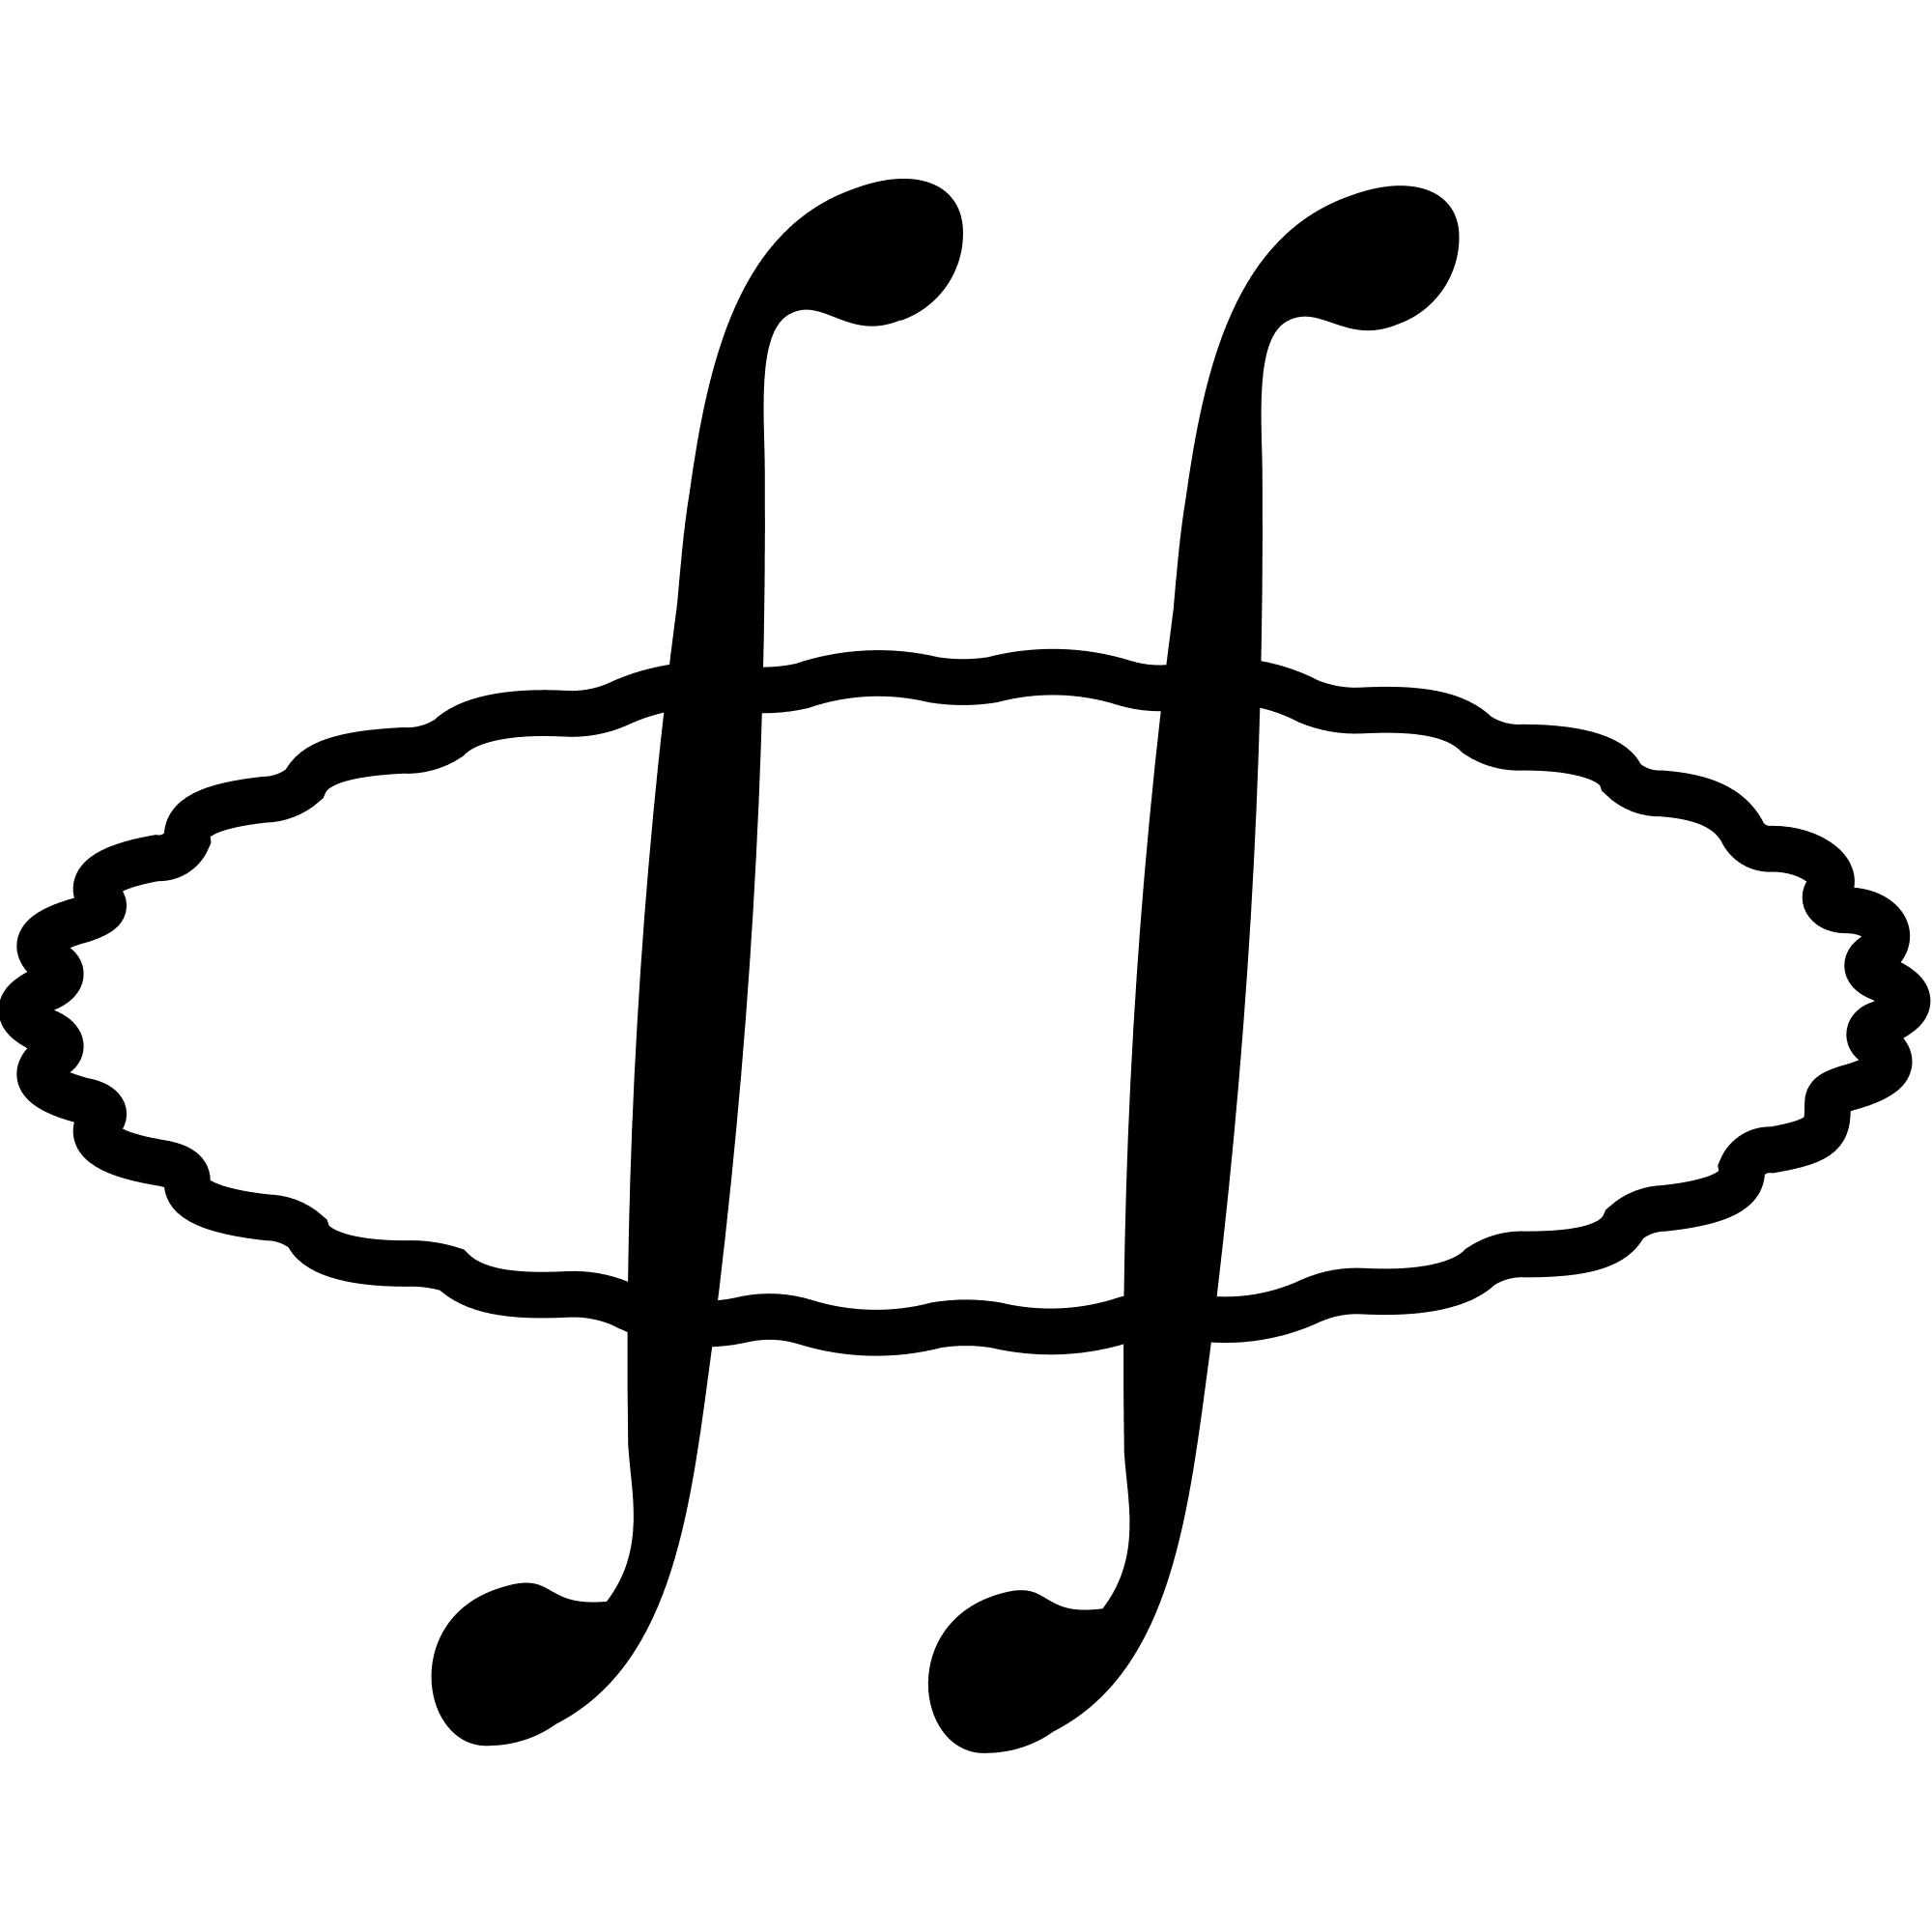 Newton logo in png format